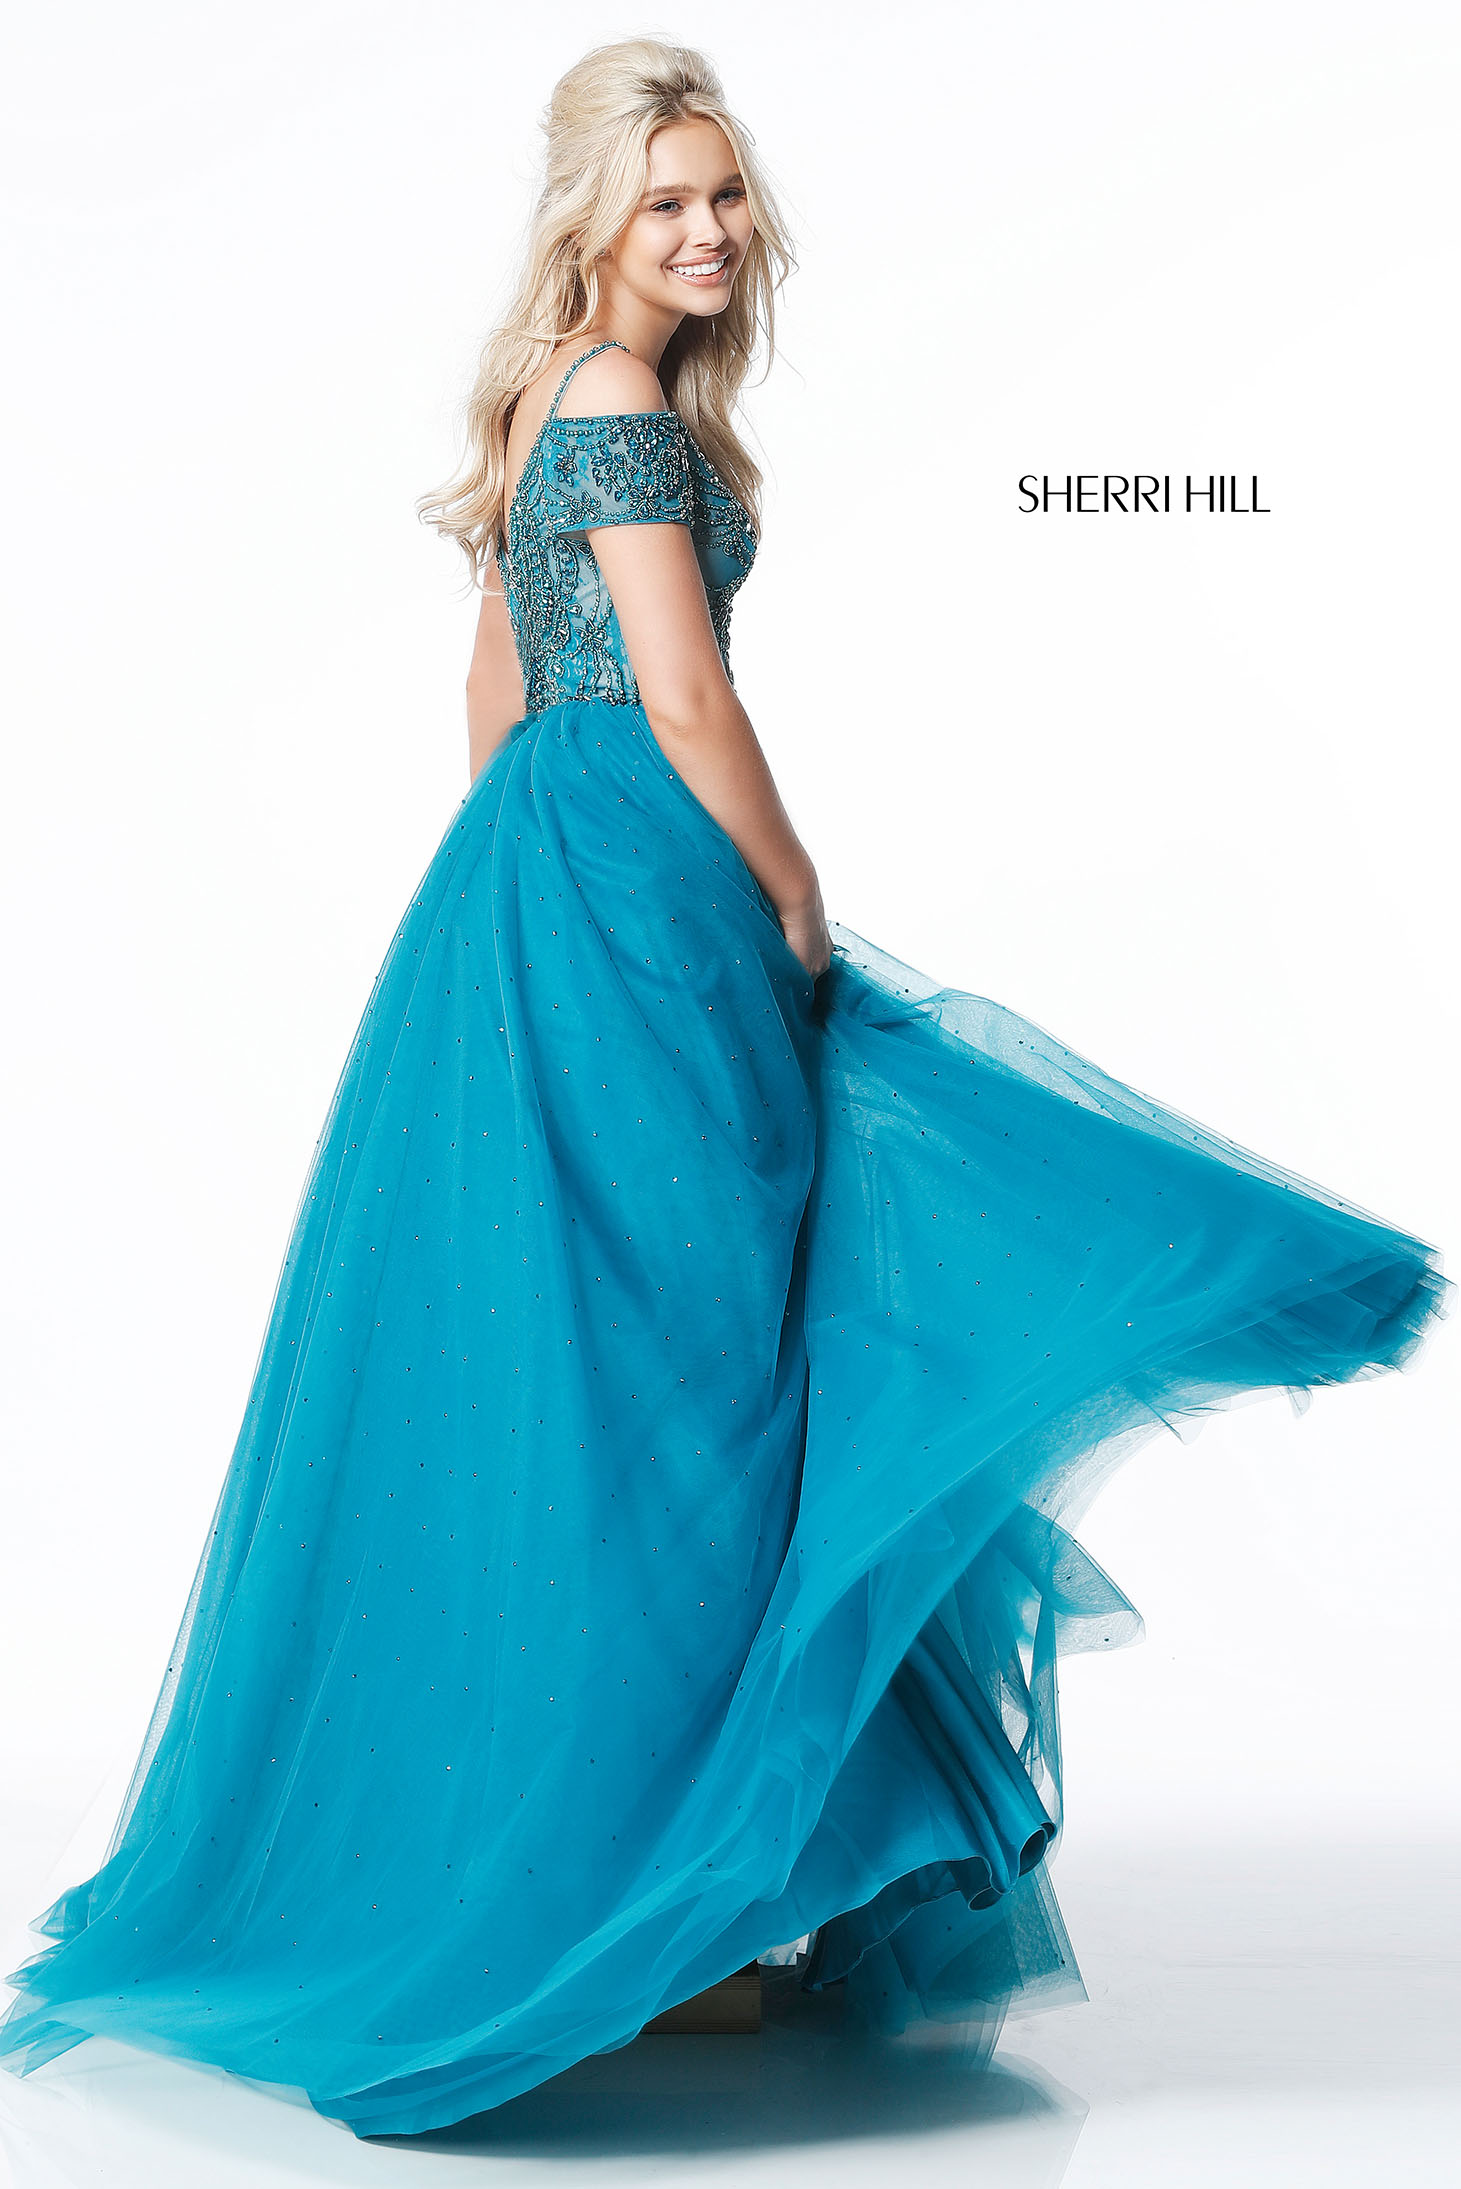 Sherri Hill 51450 Turquoise Dress